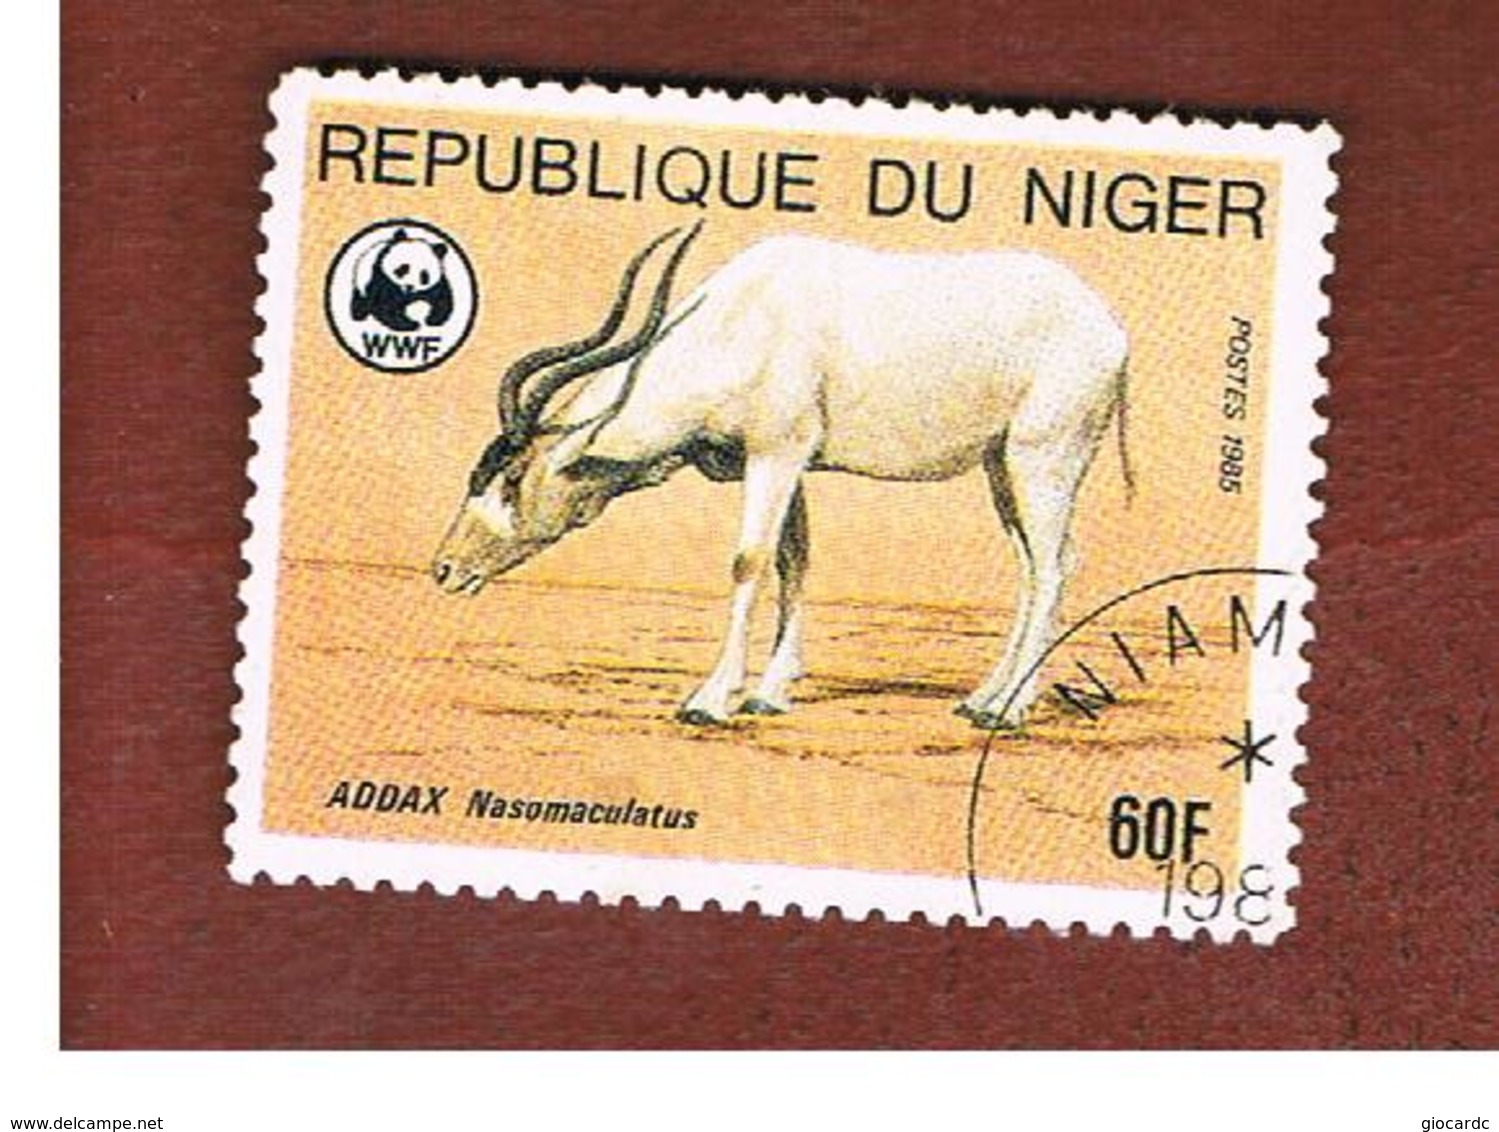 NIGER  -  SG 1039  -  1985 WWF: ENDANGERED ANIMALS (ADDAX)  -  USED * - Niger (1960-...)